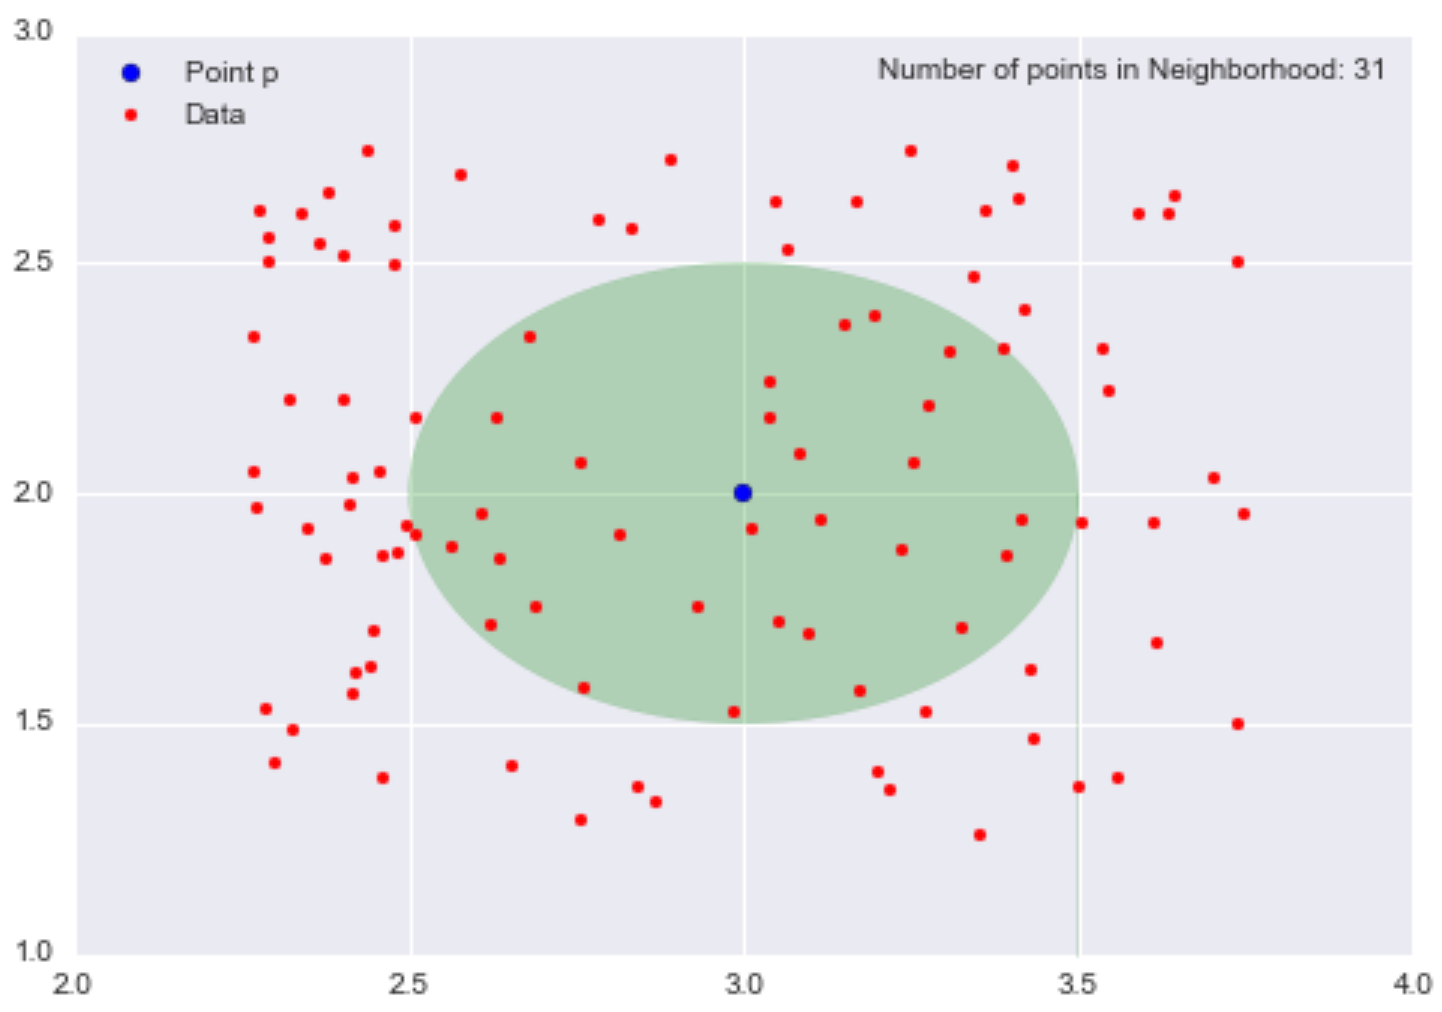 Neighborhood of p = (3,2) of radius 0.5